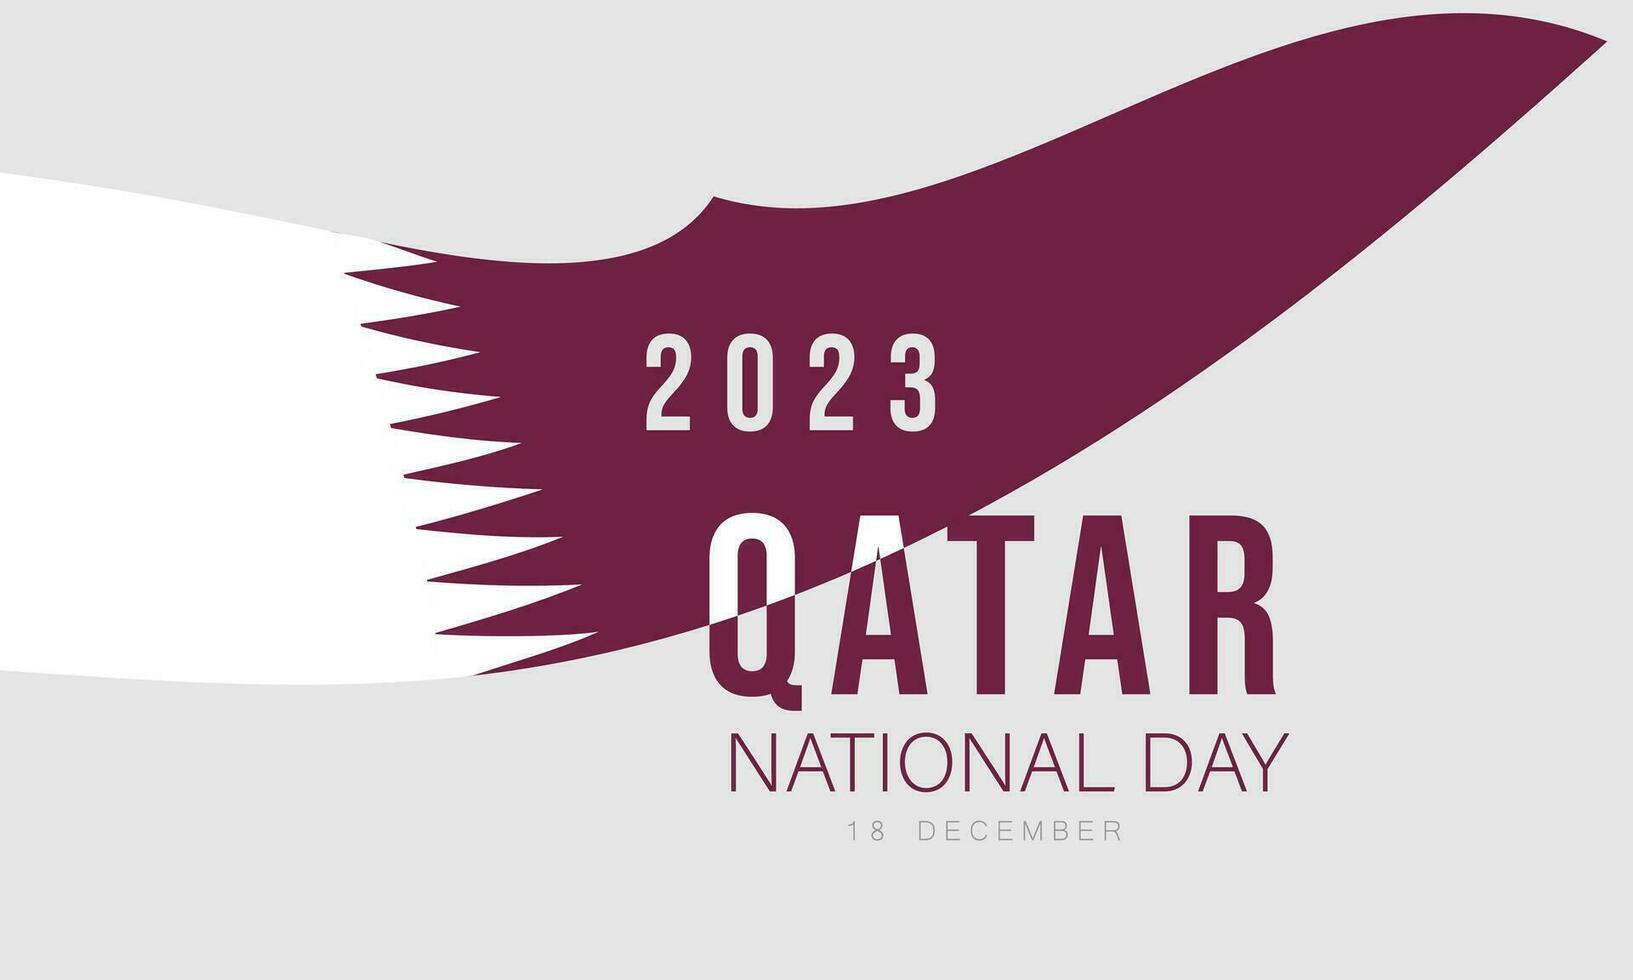 Katar National Tag. Hintergrund, Banner, Karte, Poster, Vorlage. Vektor Illustration.